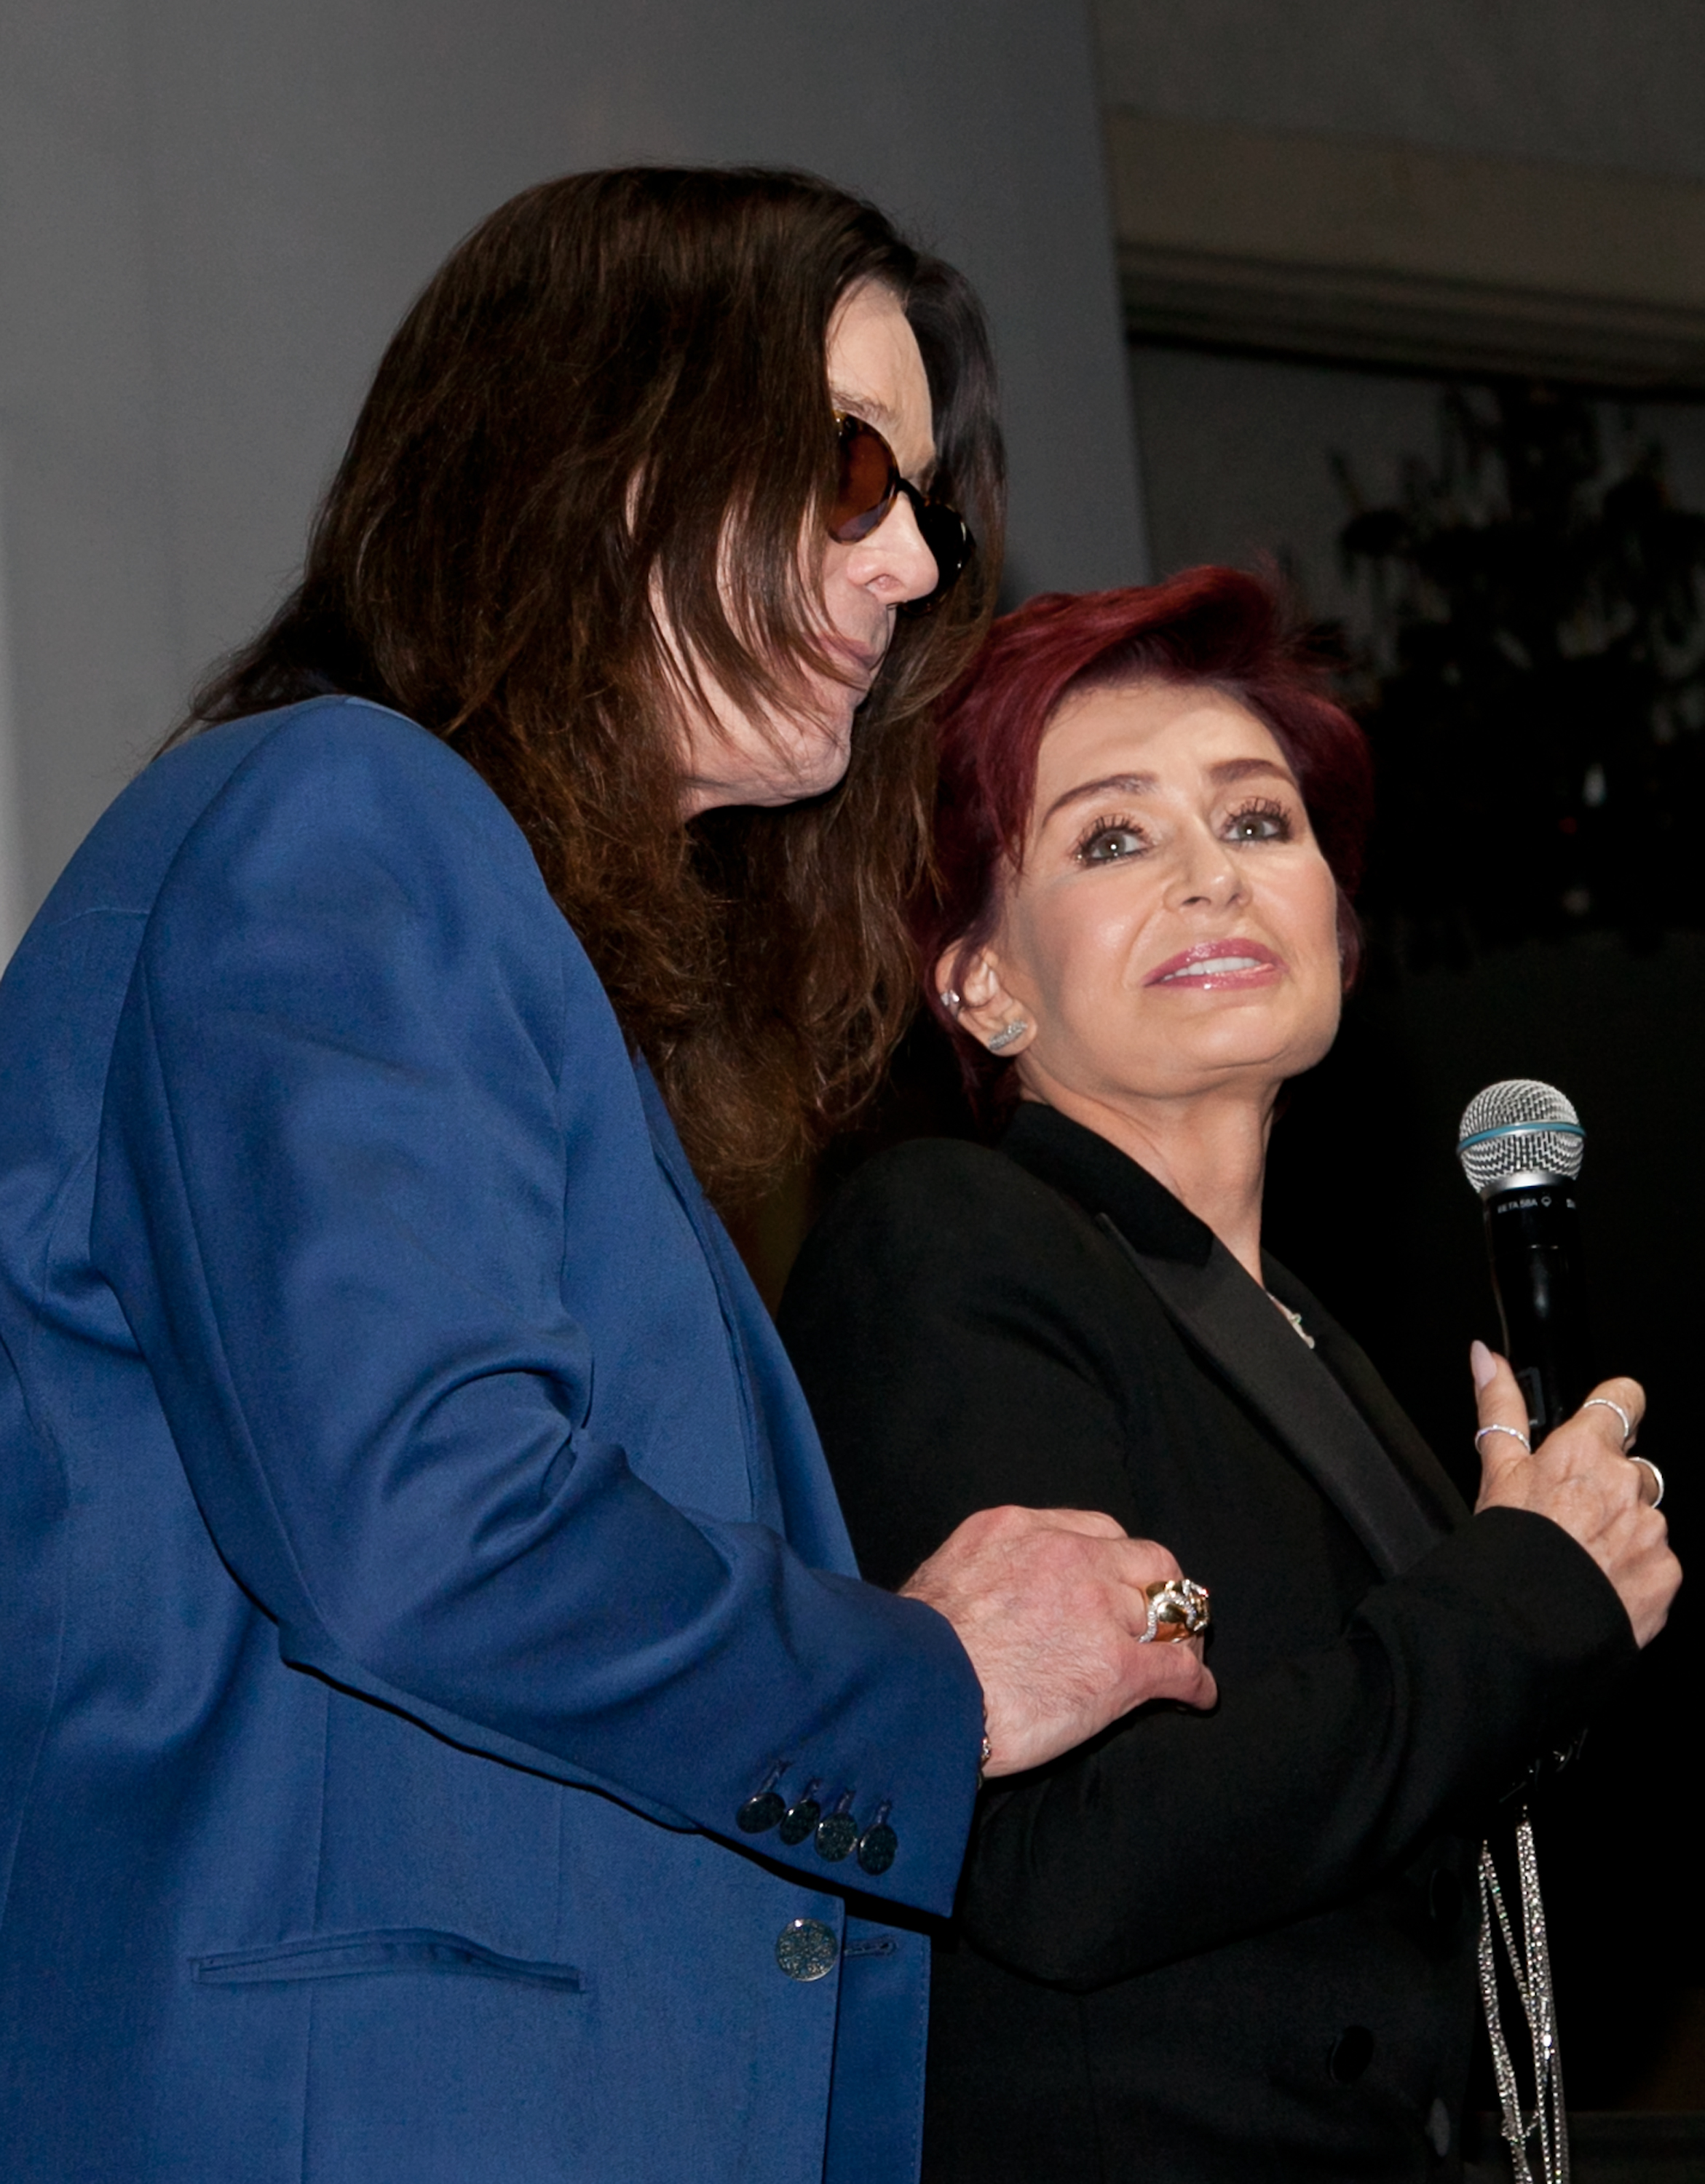 Ozzy Osbourne and Sharon Osbourne standing together